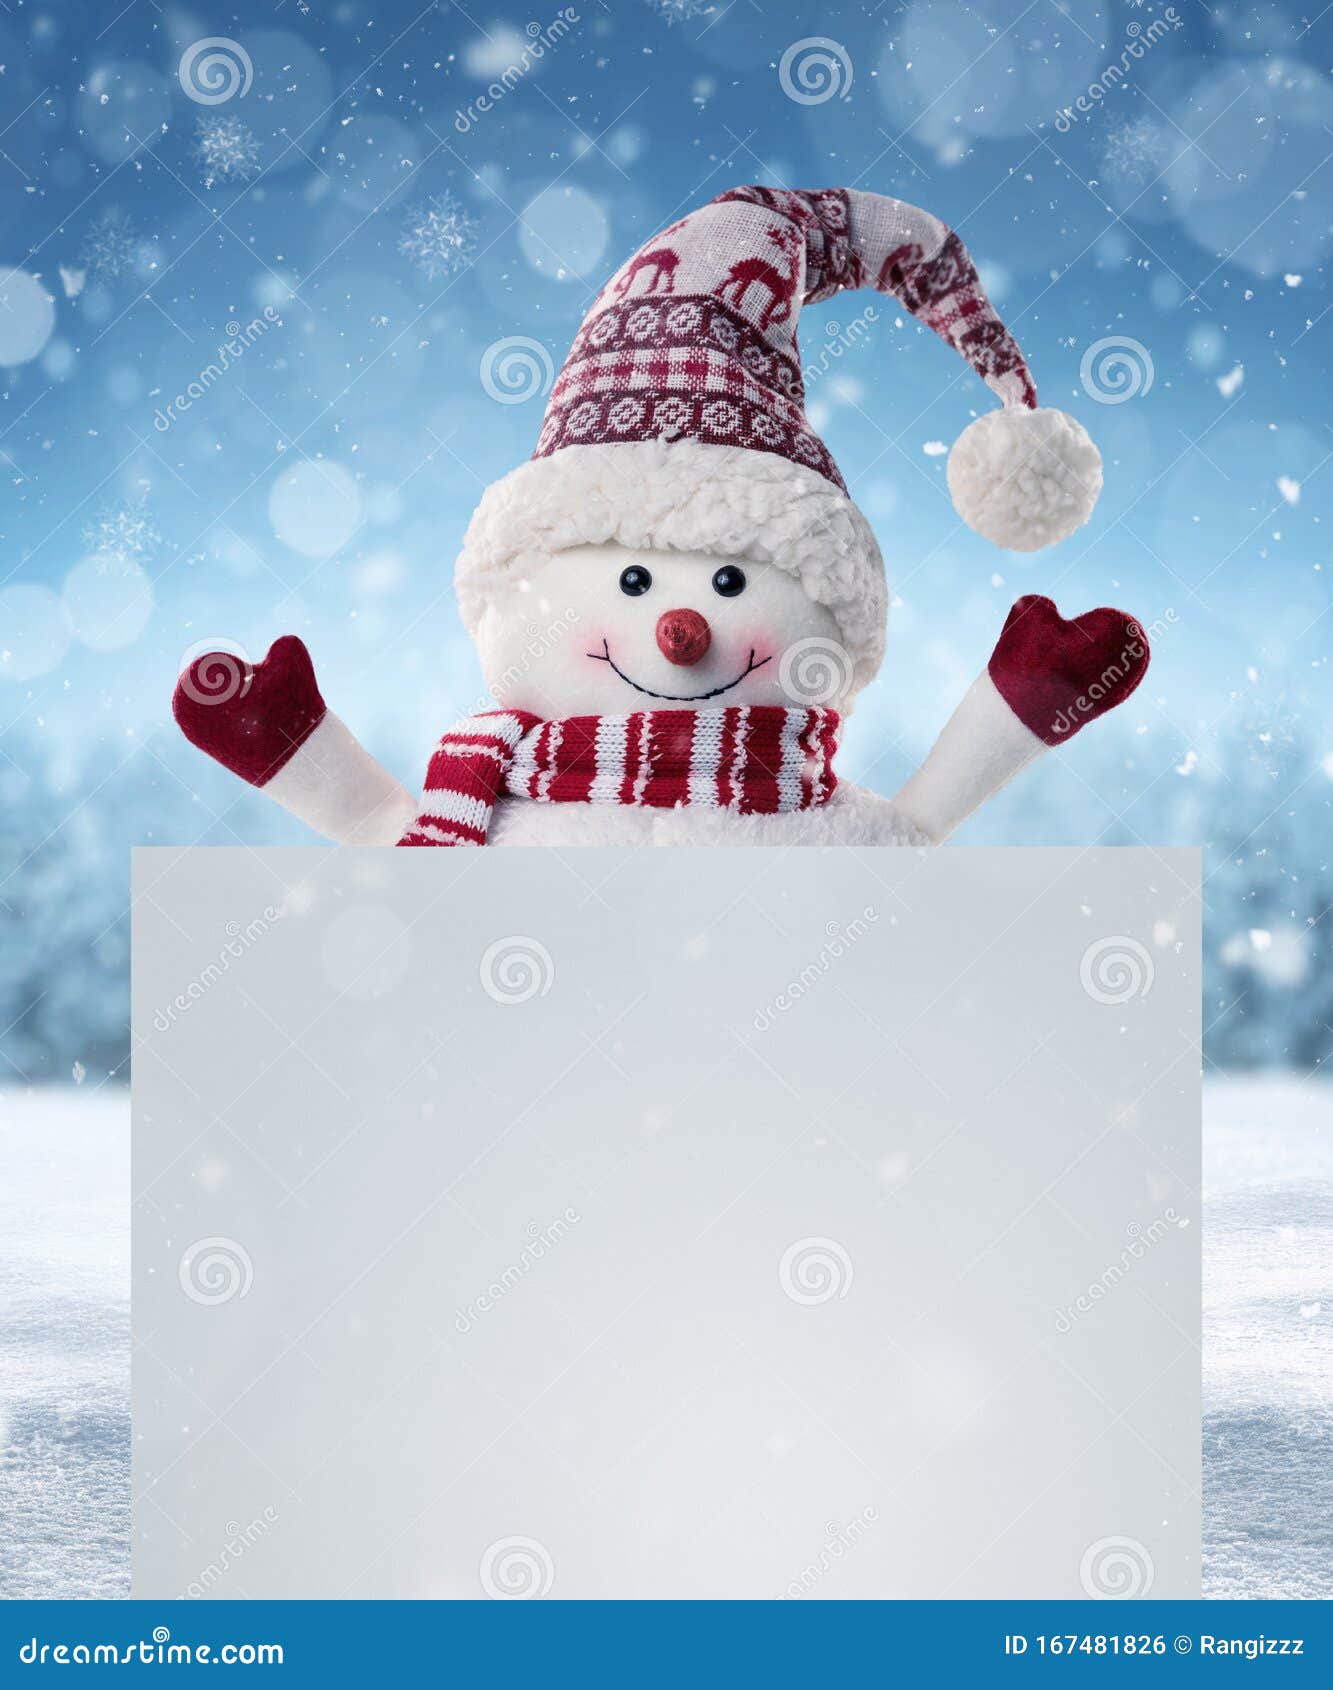 Holiday Felt & Tinsel Whimsical "Let's Celebrate Snow" Snowman 